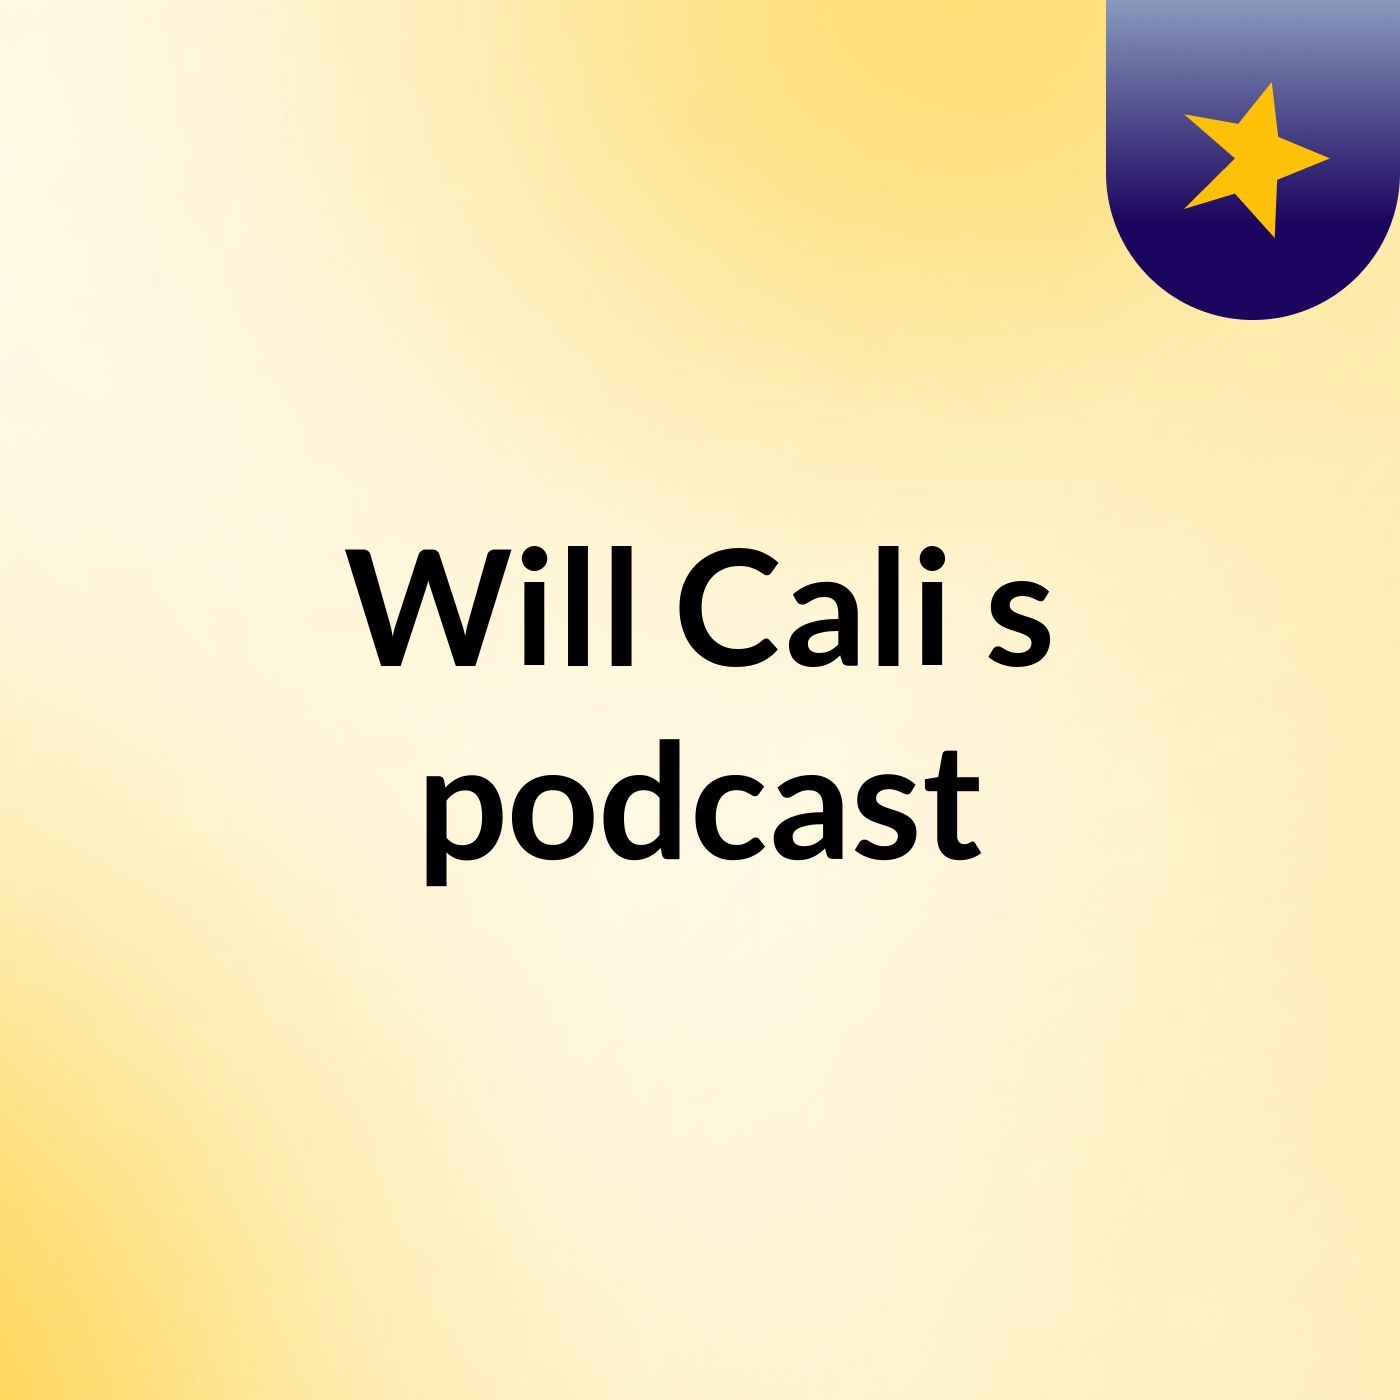 Will Cali's podcast